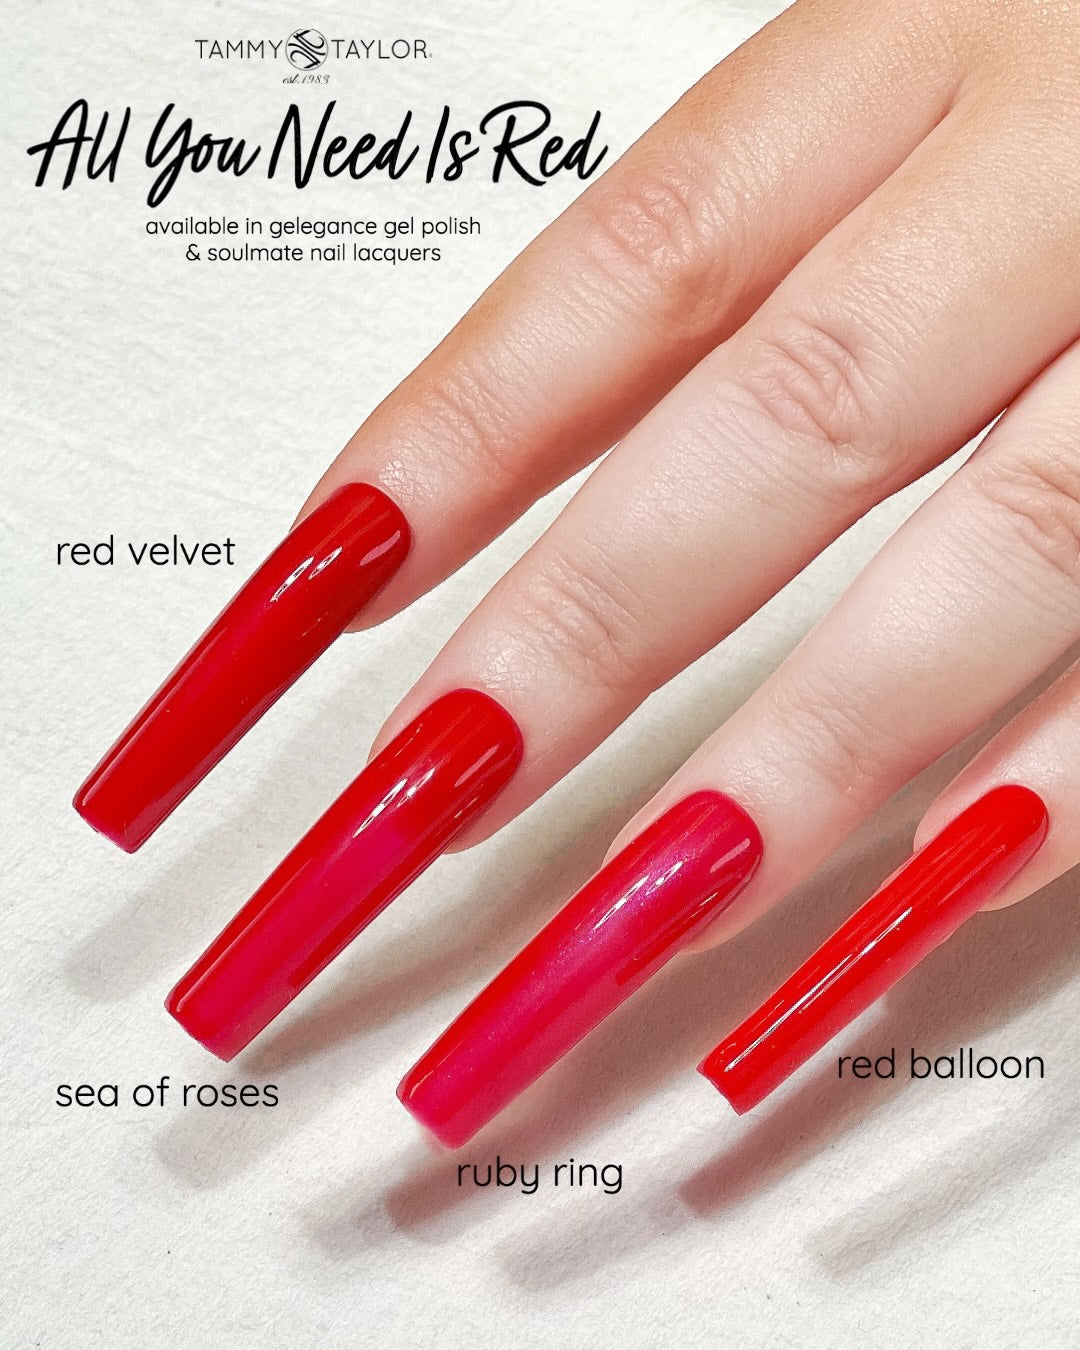 Opi big apple red gel manicure  Gel manicure colors, Manicure colors, Gel  manicure nails